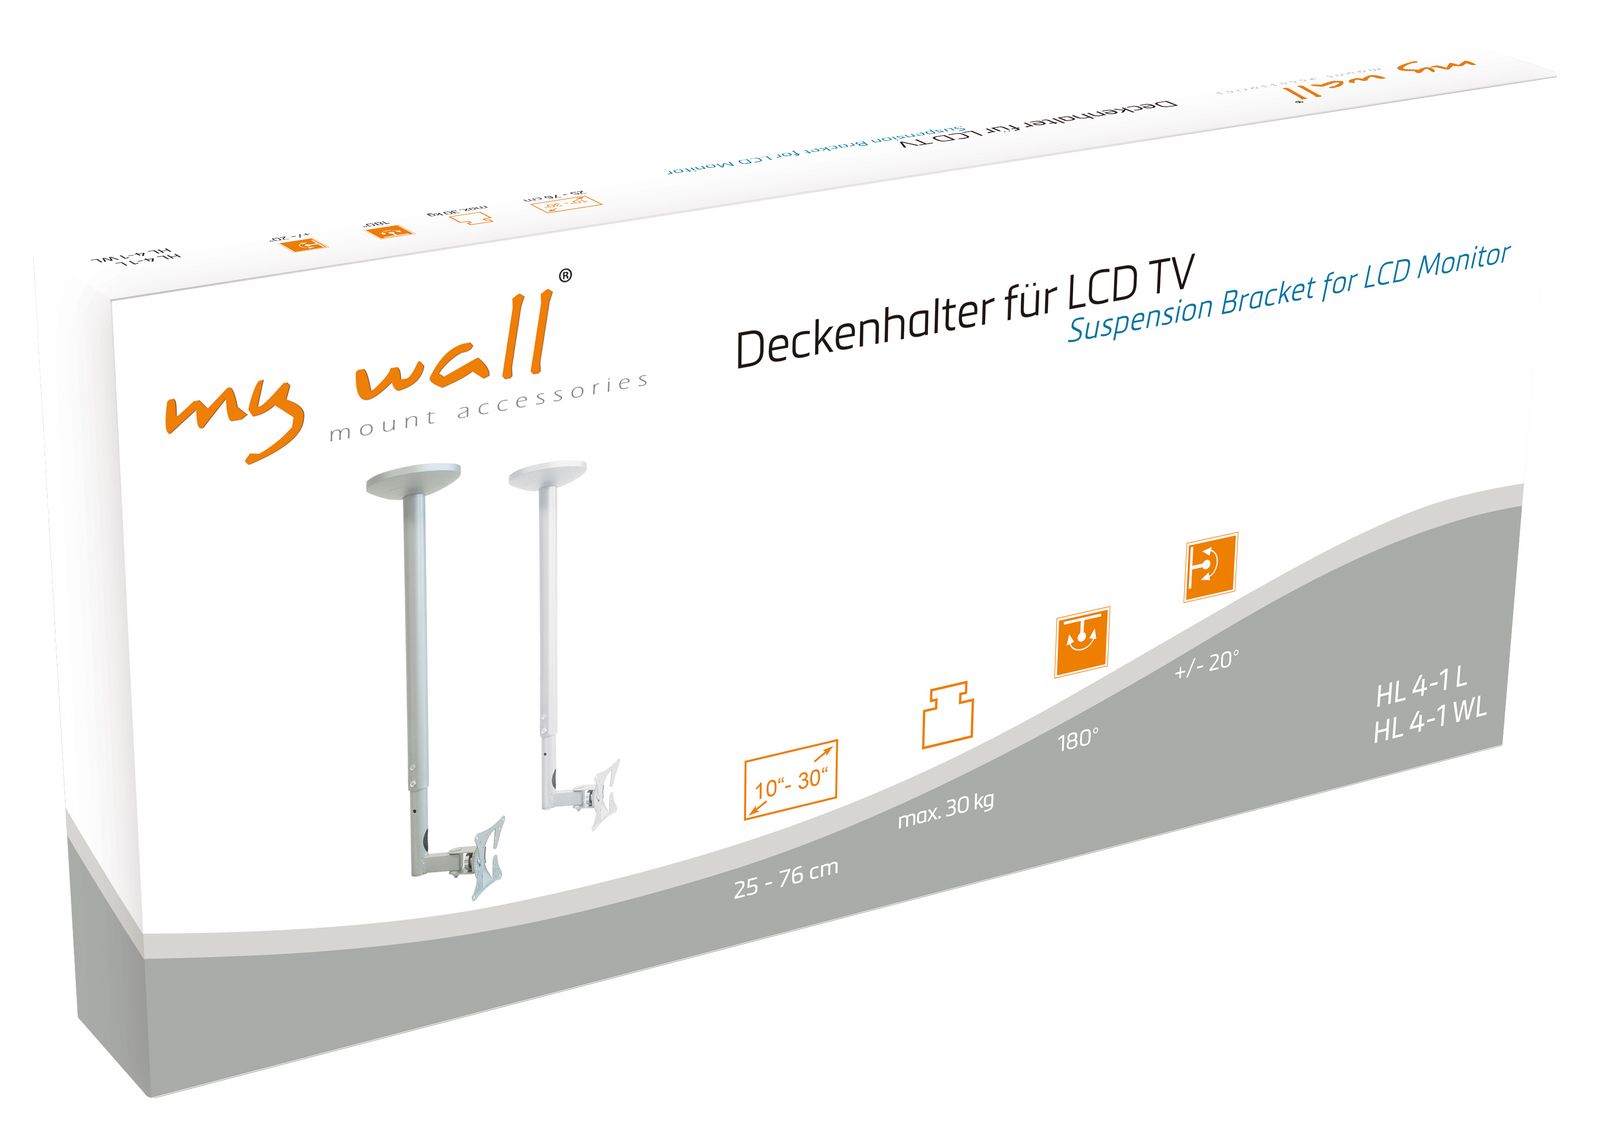 Deckenhalter für LCD TV MyWall HL4-1W-/bilder/big/HL4-1_HL4-1WL_Karton_72dpi.jpg